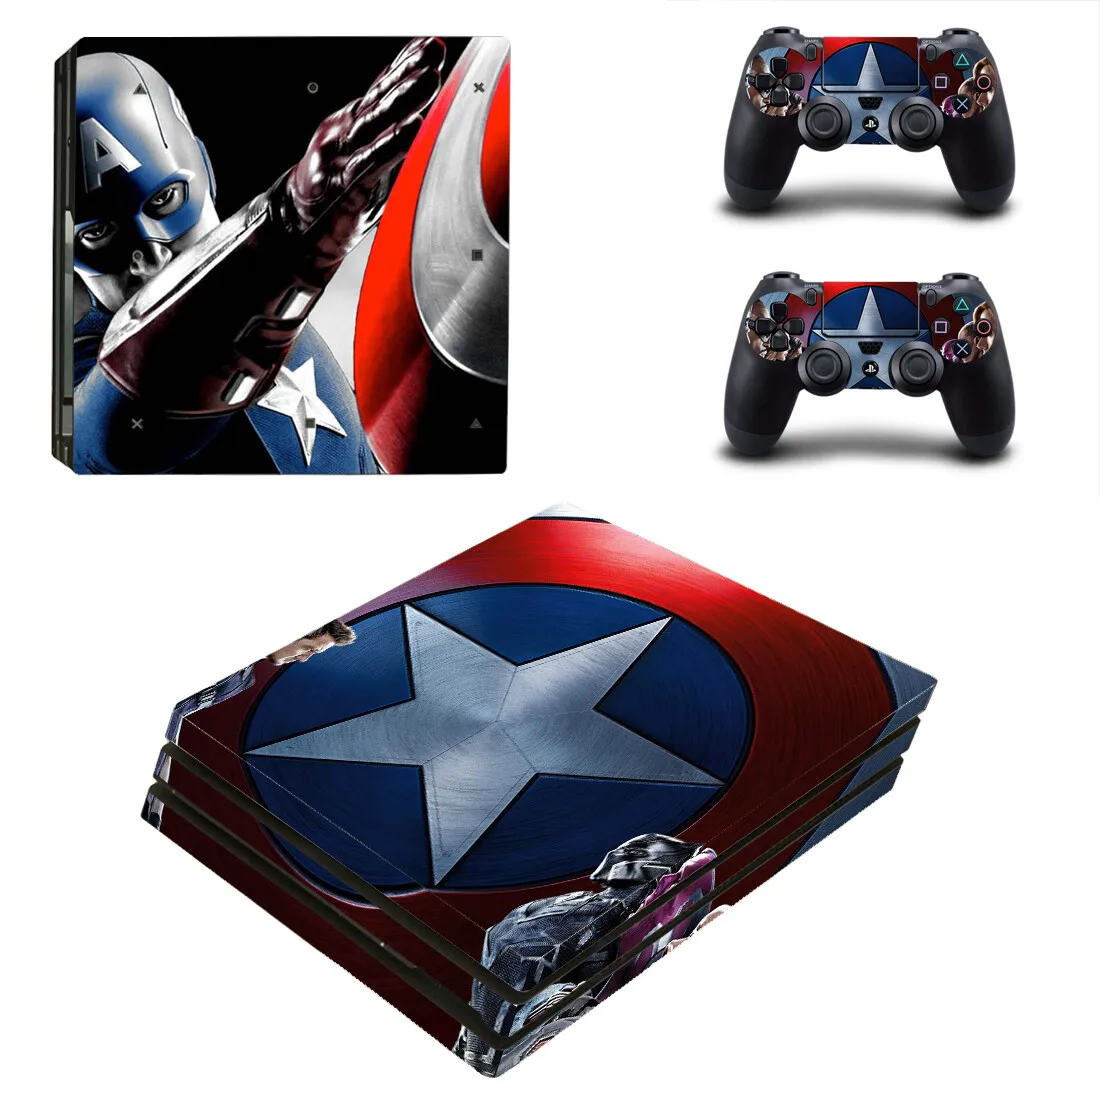 Avengers Cilt Sticker Oyun Konsolu koruyucu film için PS4pro PS4 Pro Konsolu ve 2 Oyun Kontrolörleri PS4 Pro Cilt Sticker . ' - ' . 2